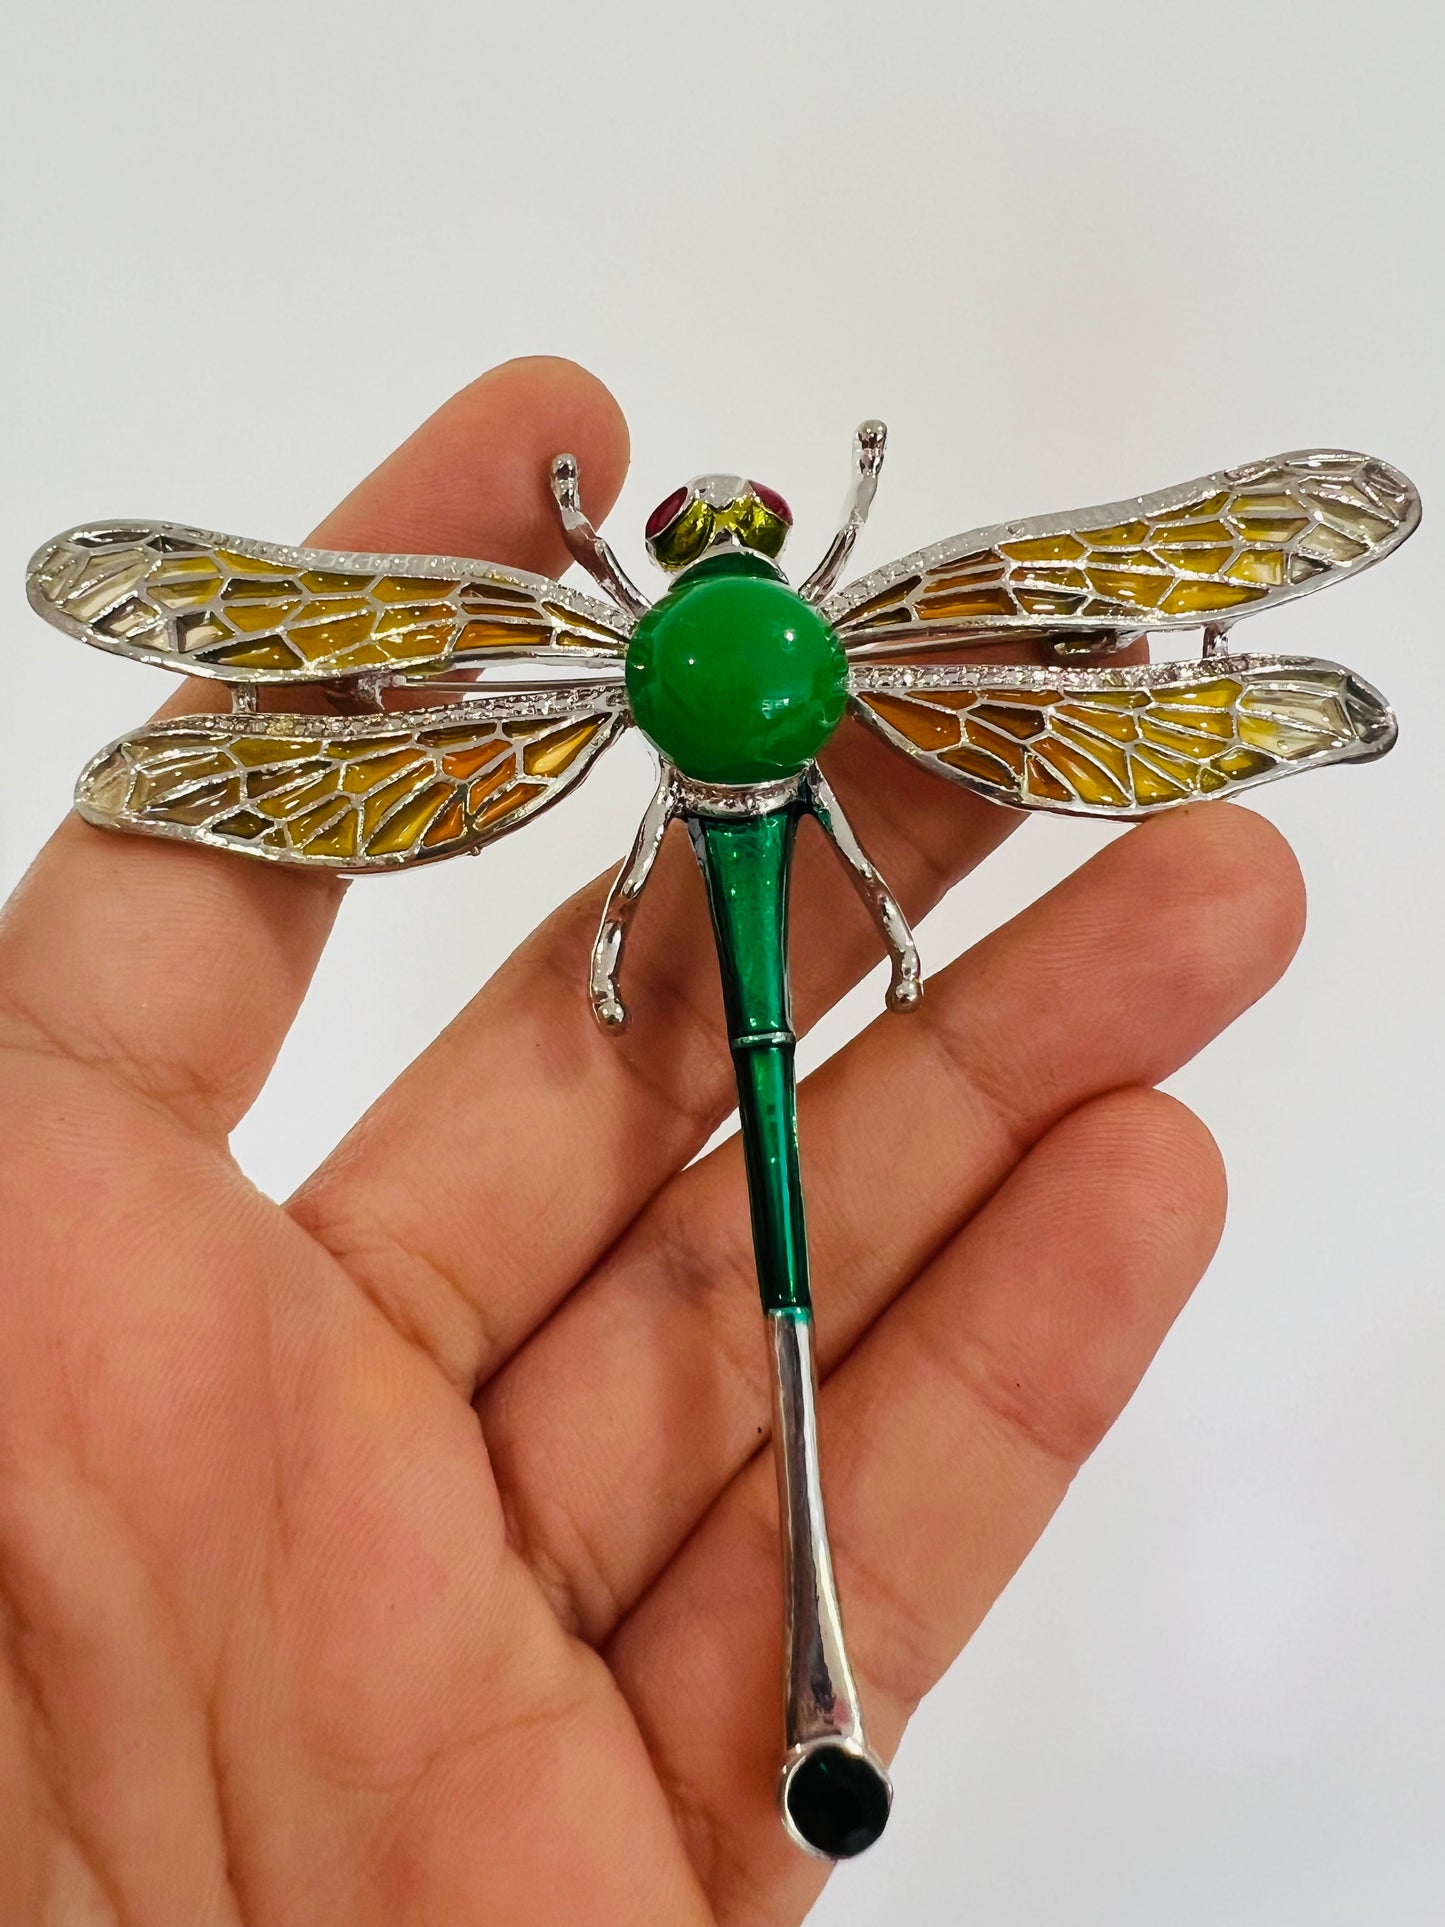 Large stylish Dragonfly Brooch